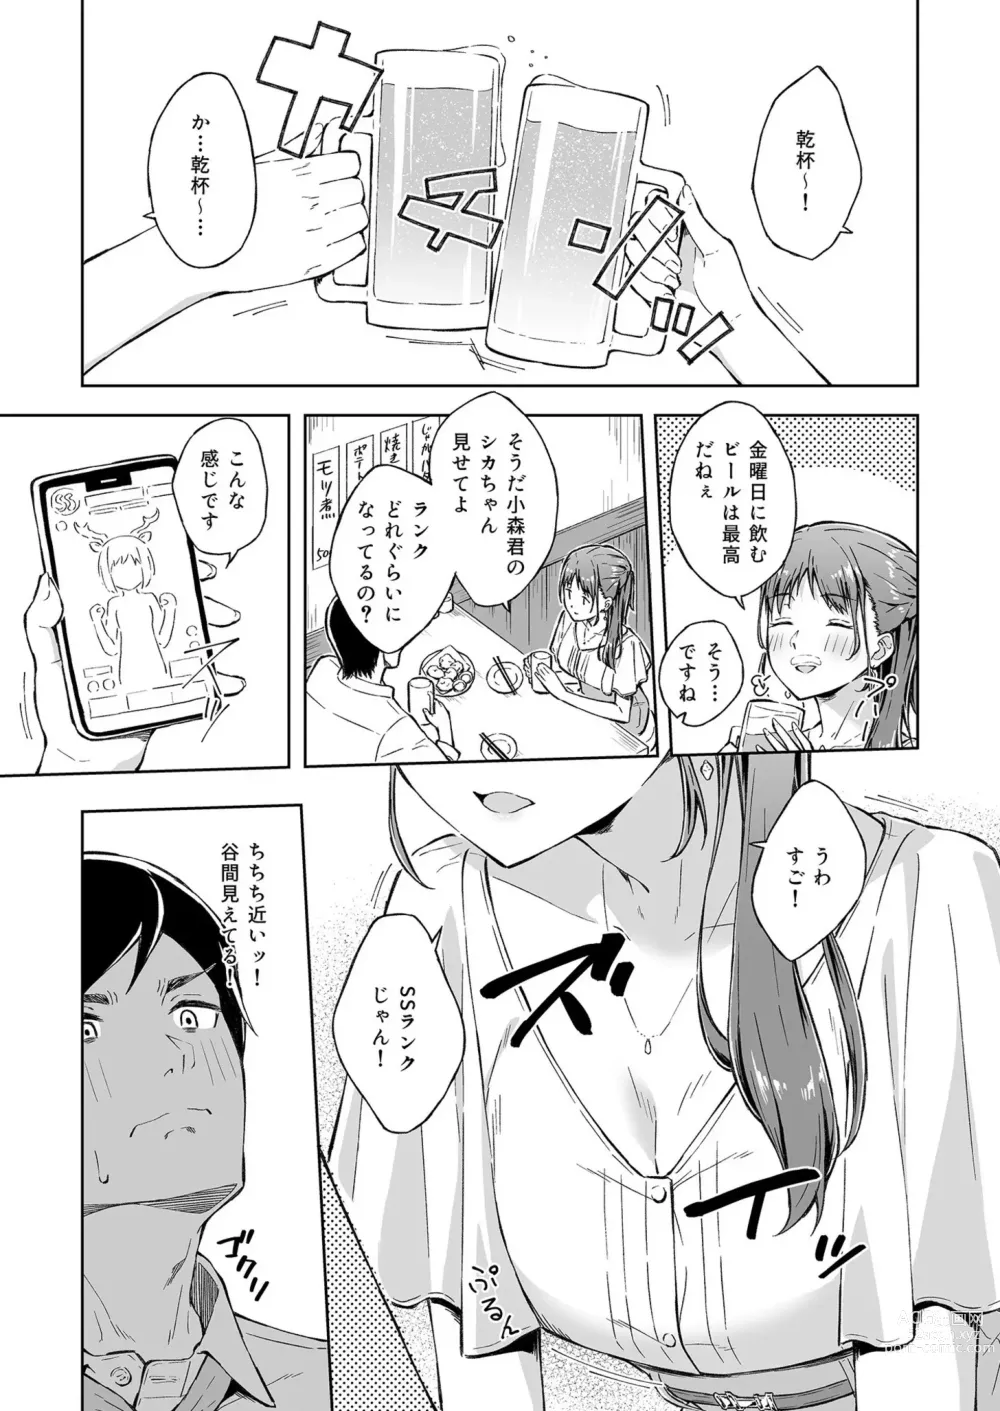 Page 5 of manga Hitohada Friend 1-3